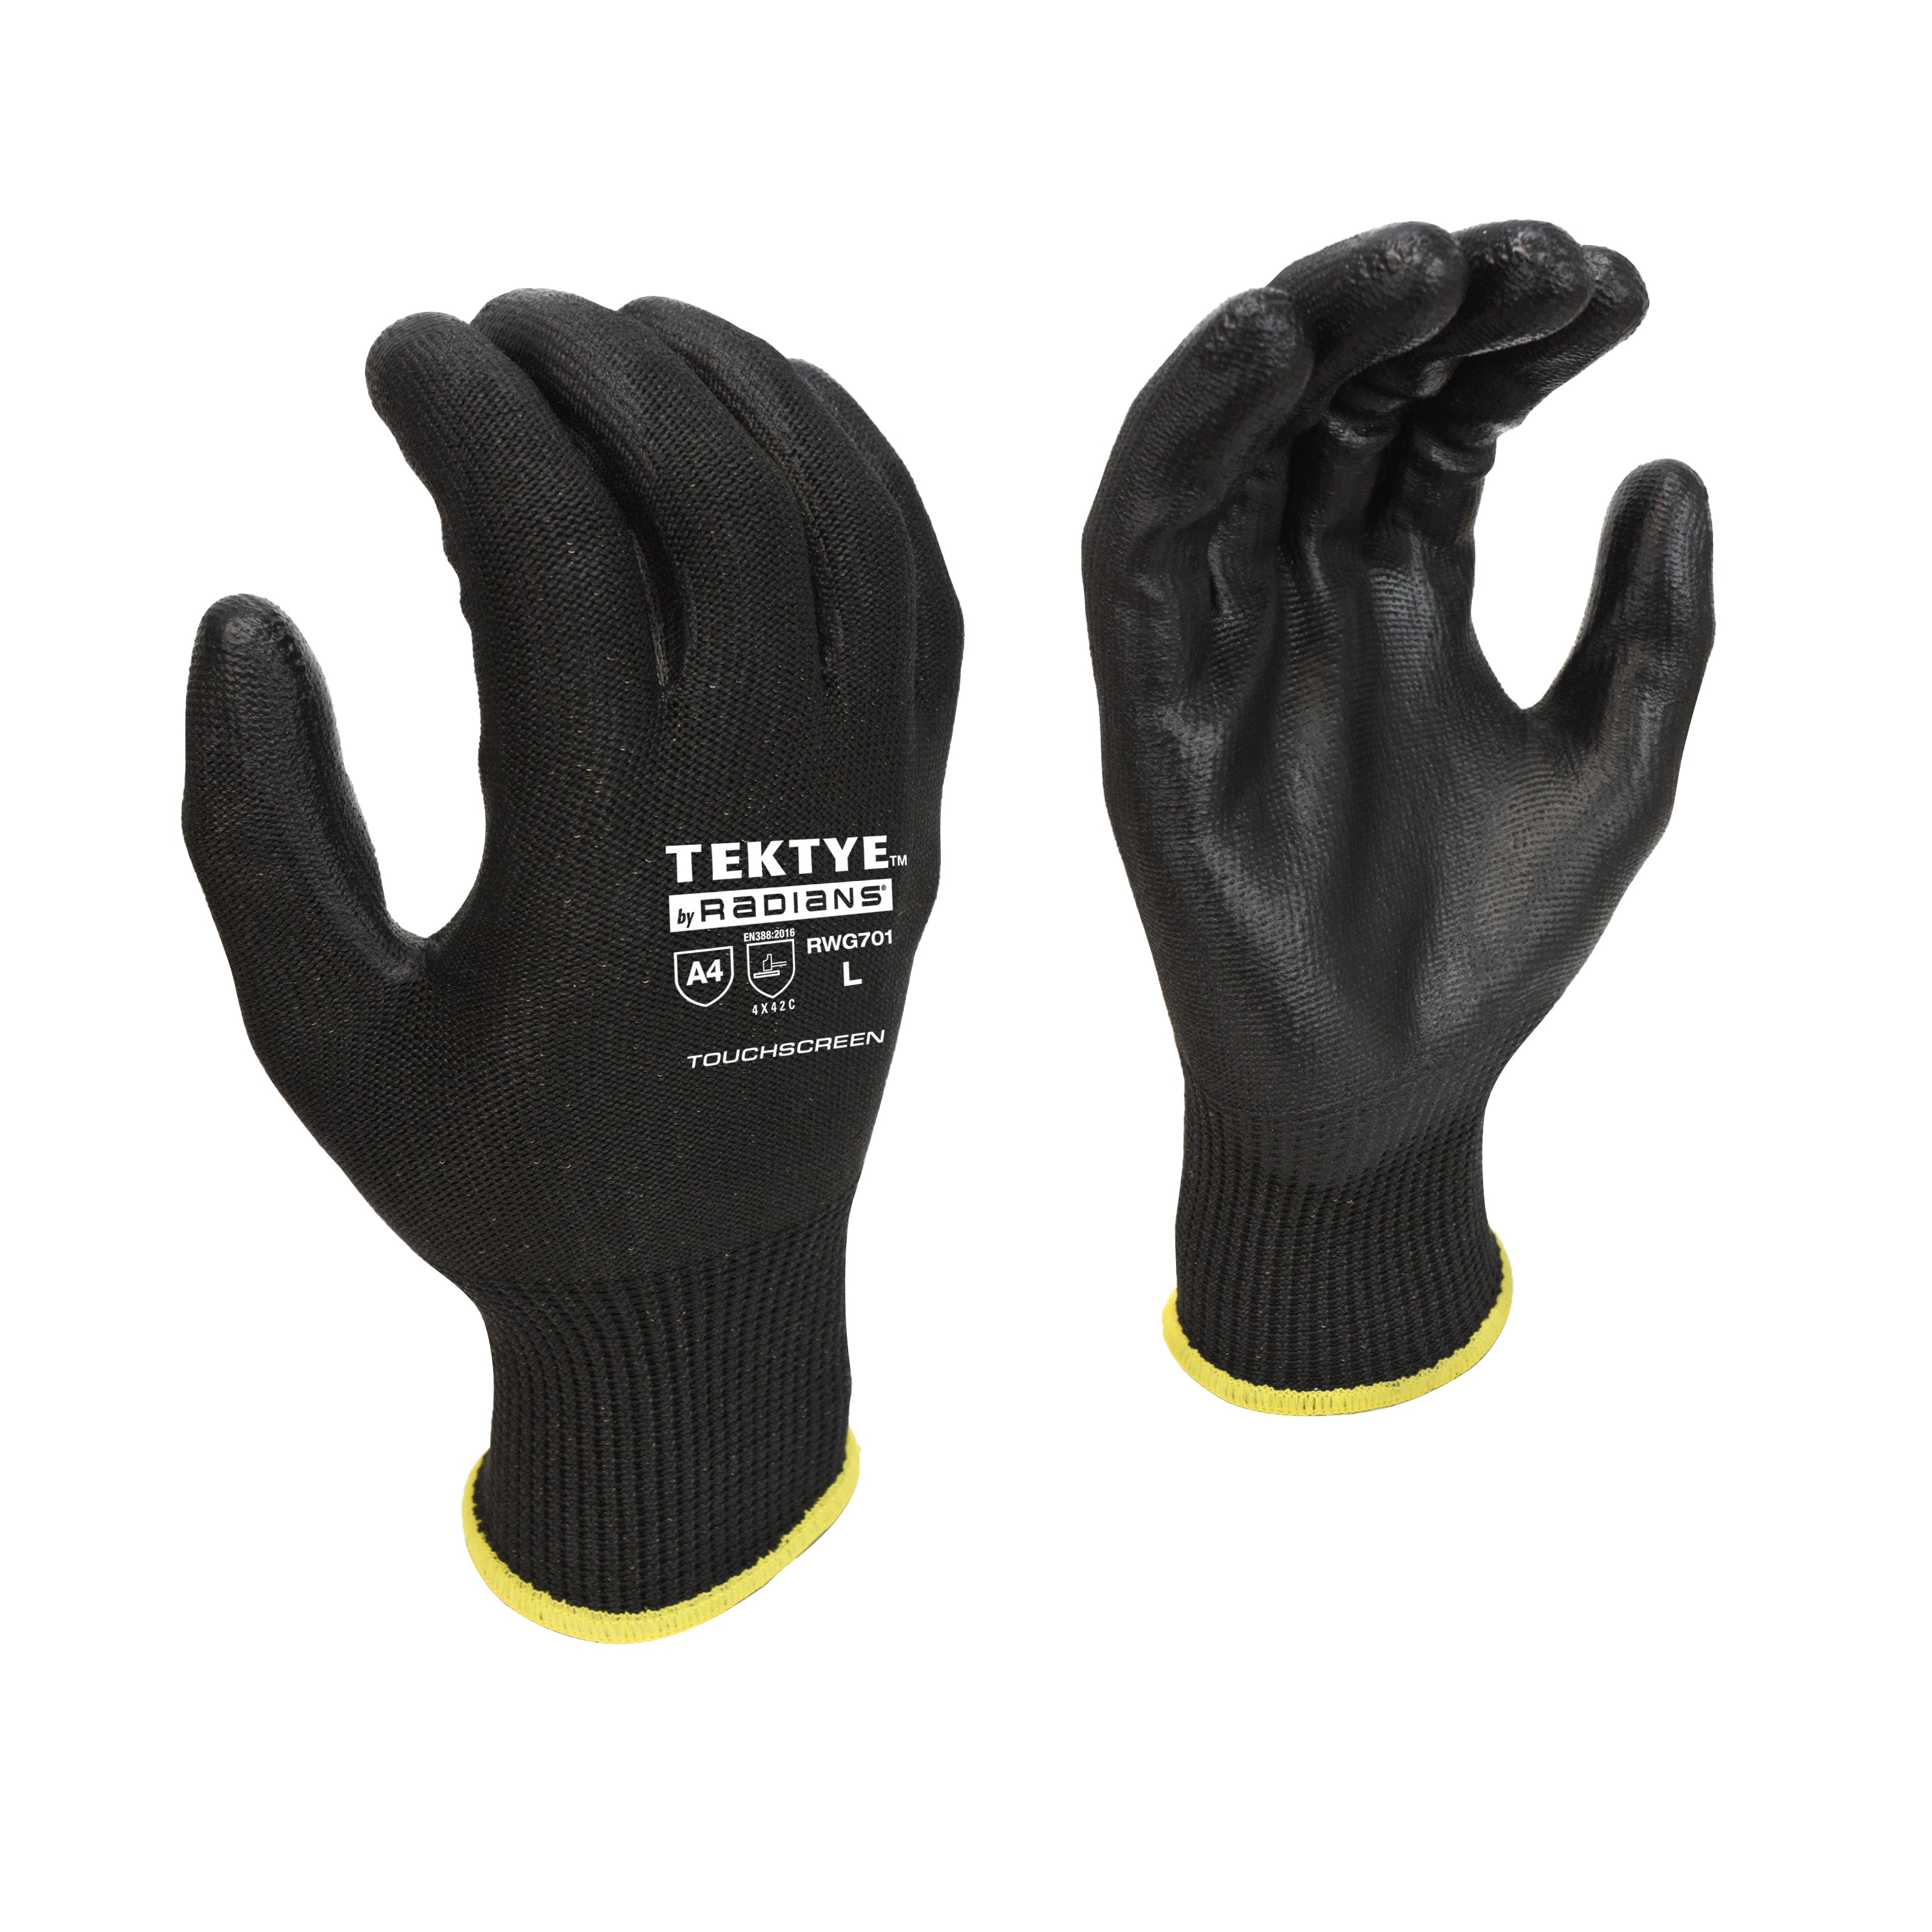 TEKTYE Touchscreen Cut 4 Gloves (Pack of 12)